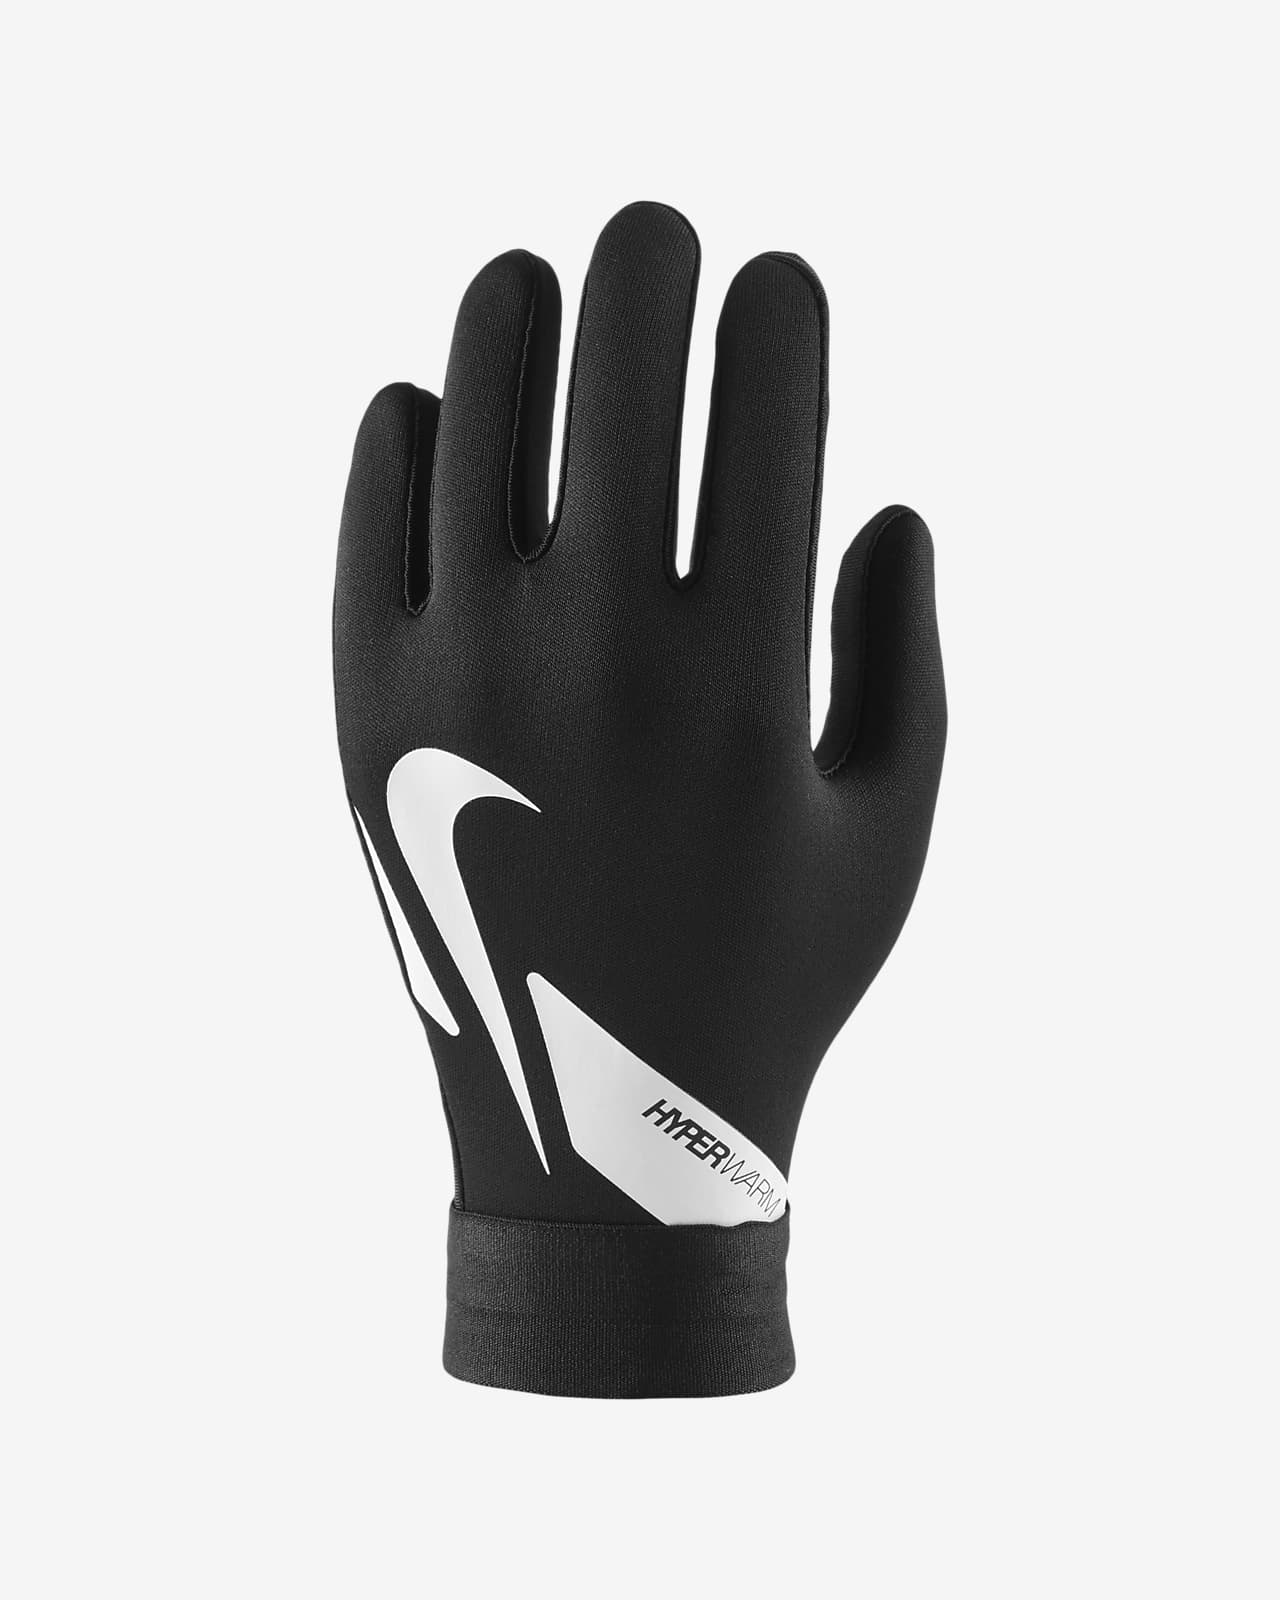 nike football training gloves